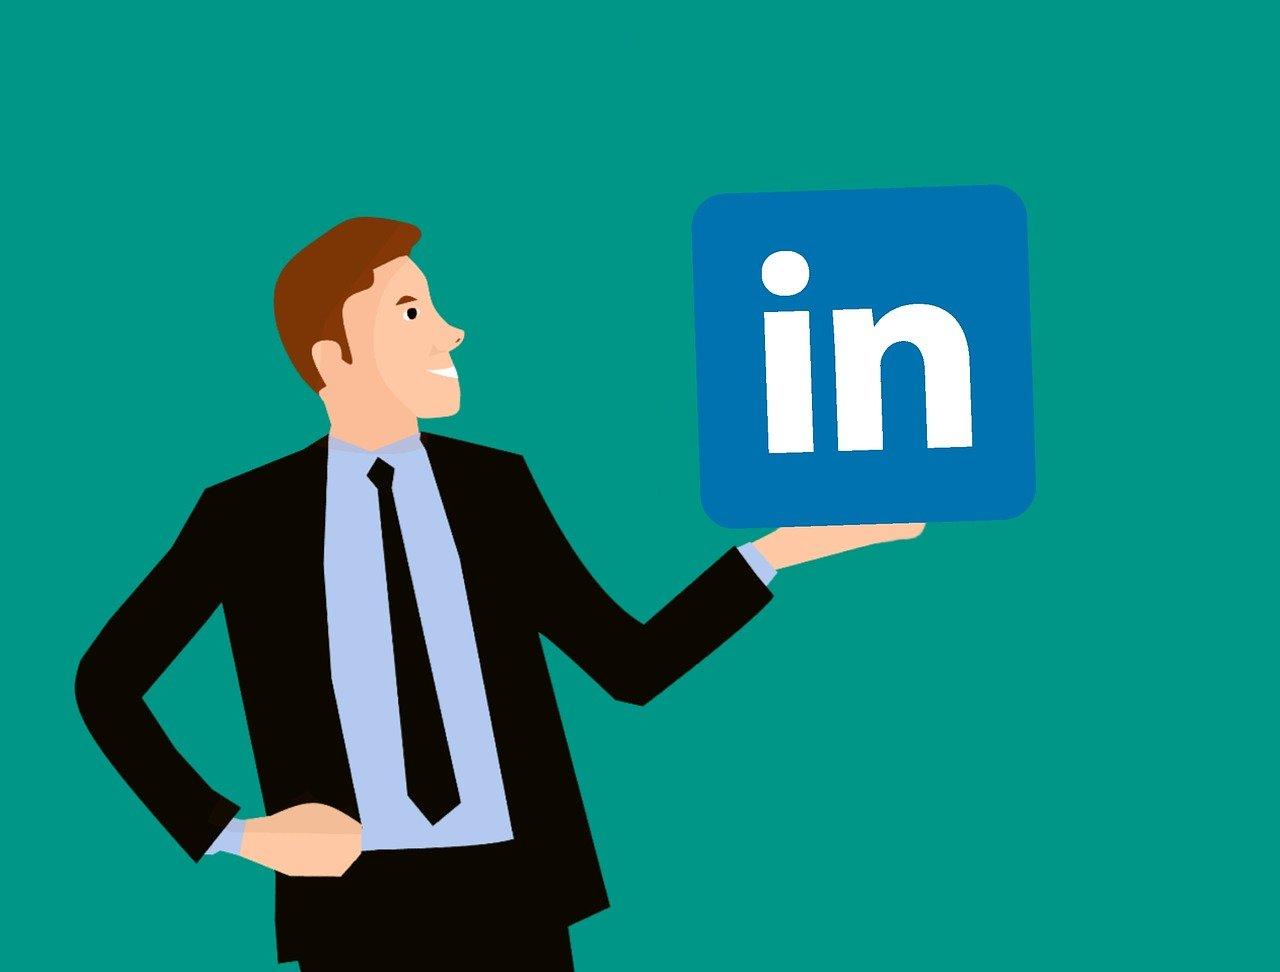 Explore LinkedIn Premium for Business Growth